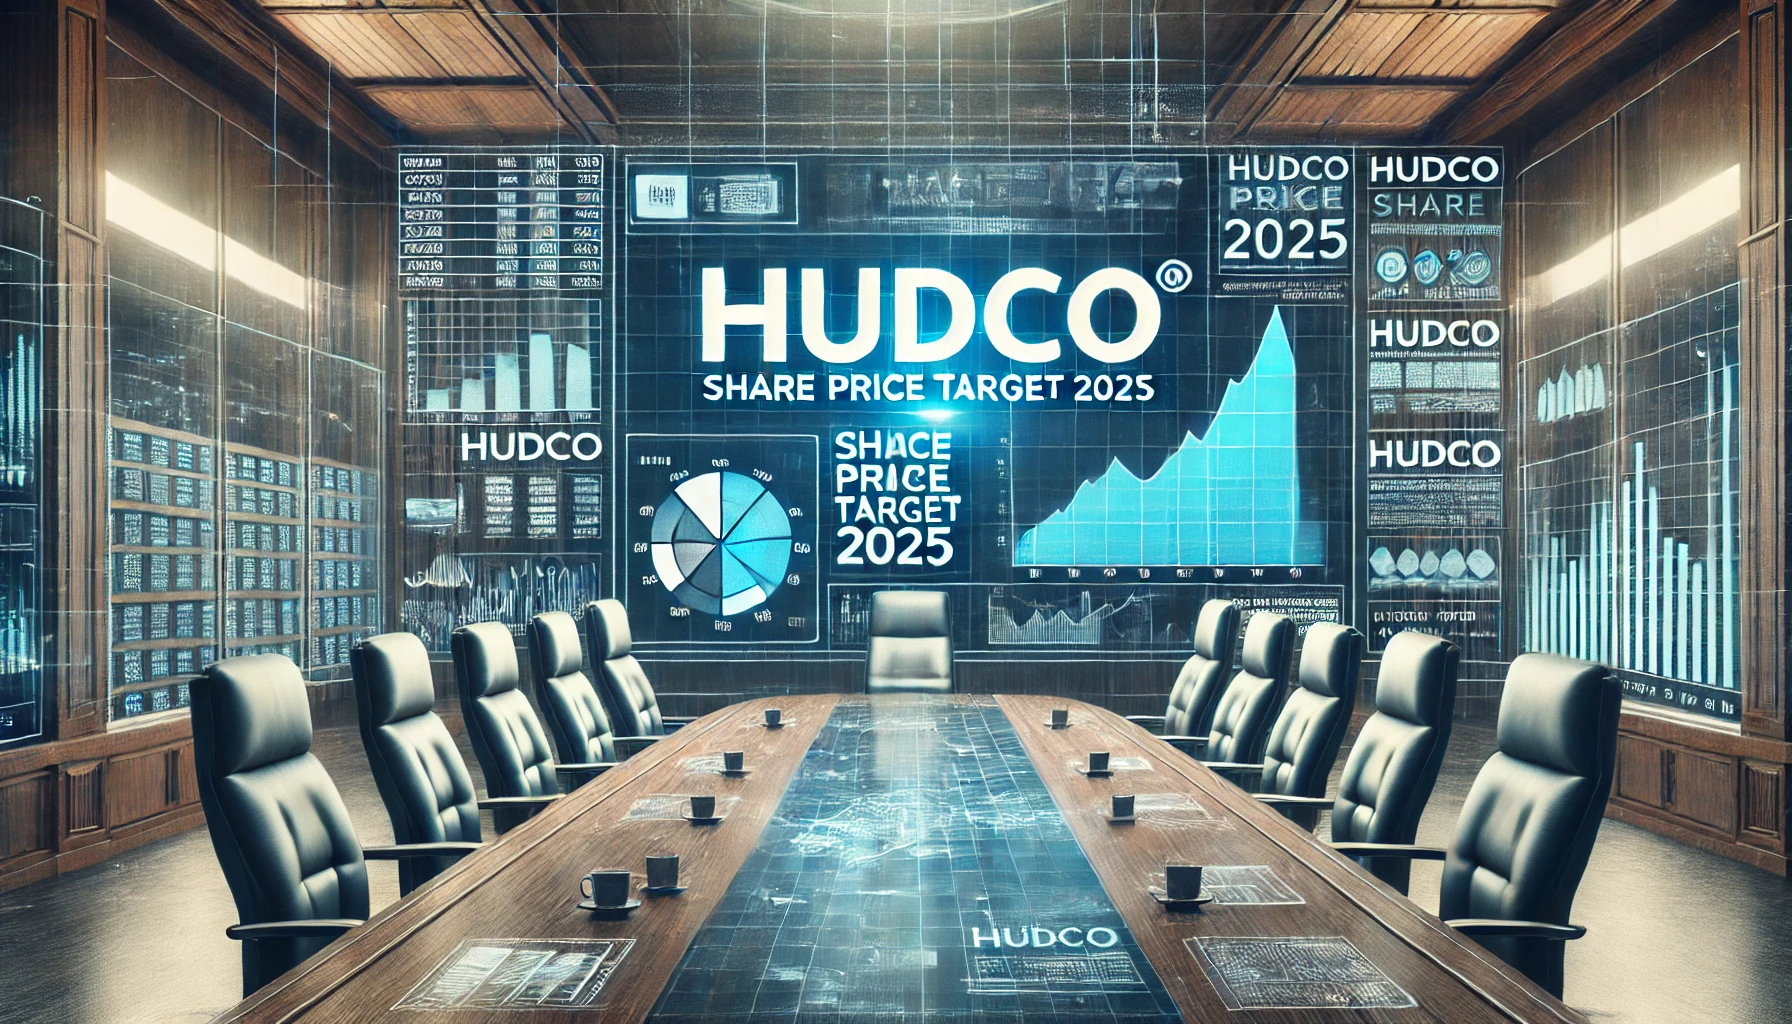 Hudco Share Price Target 2025